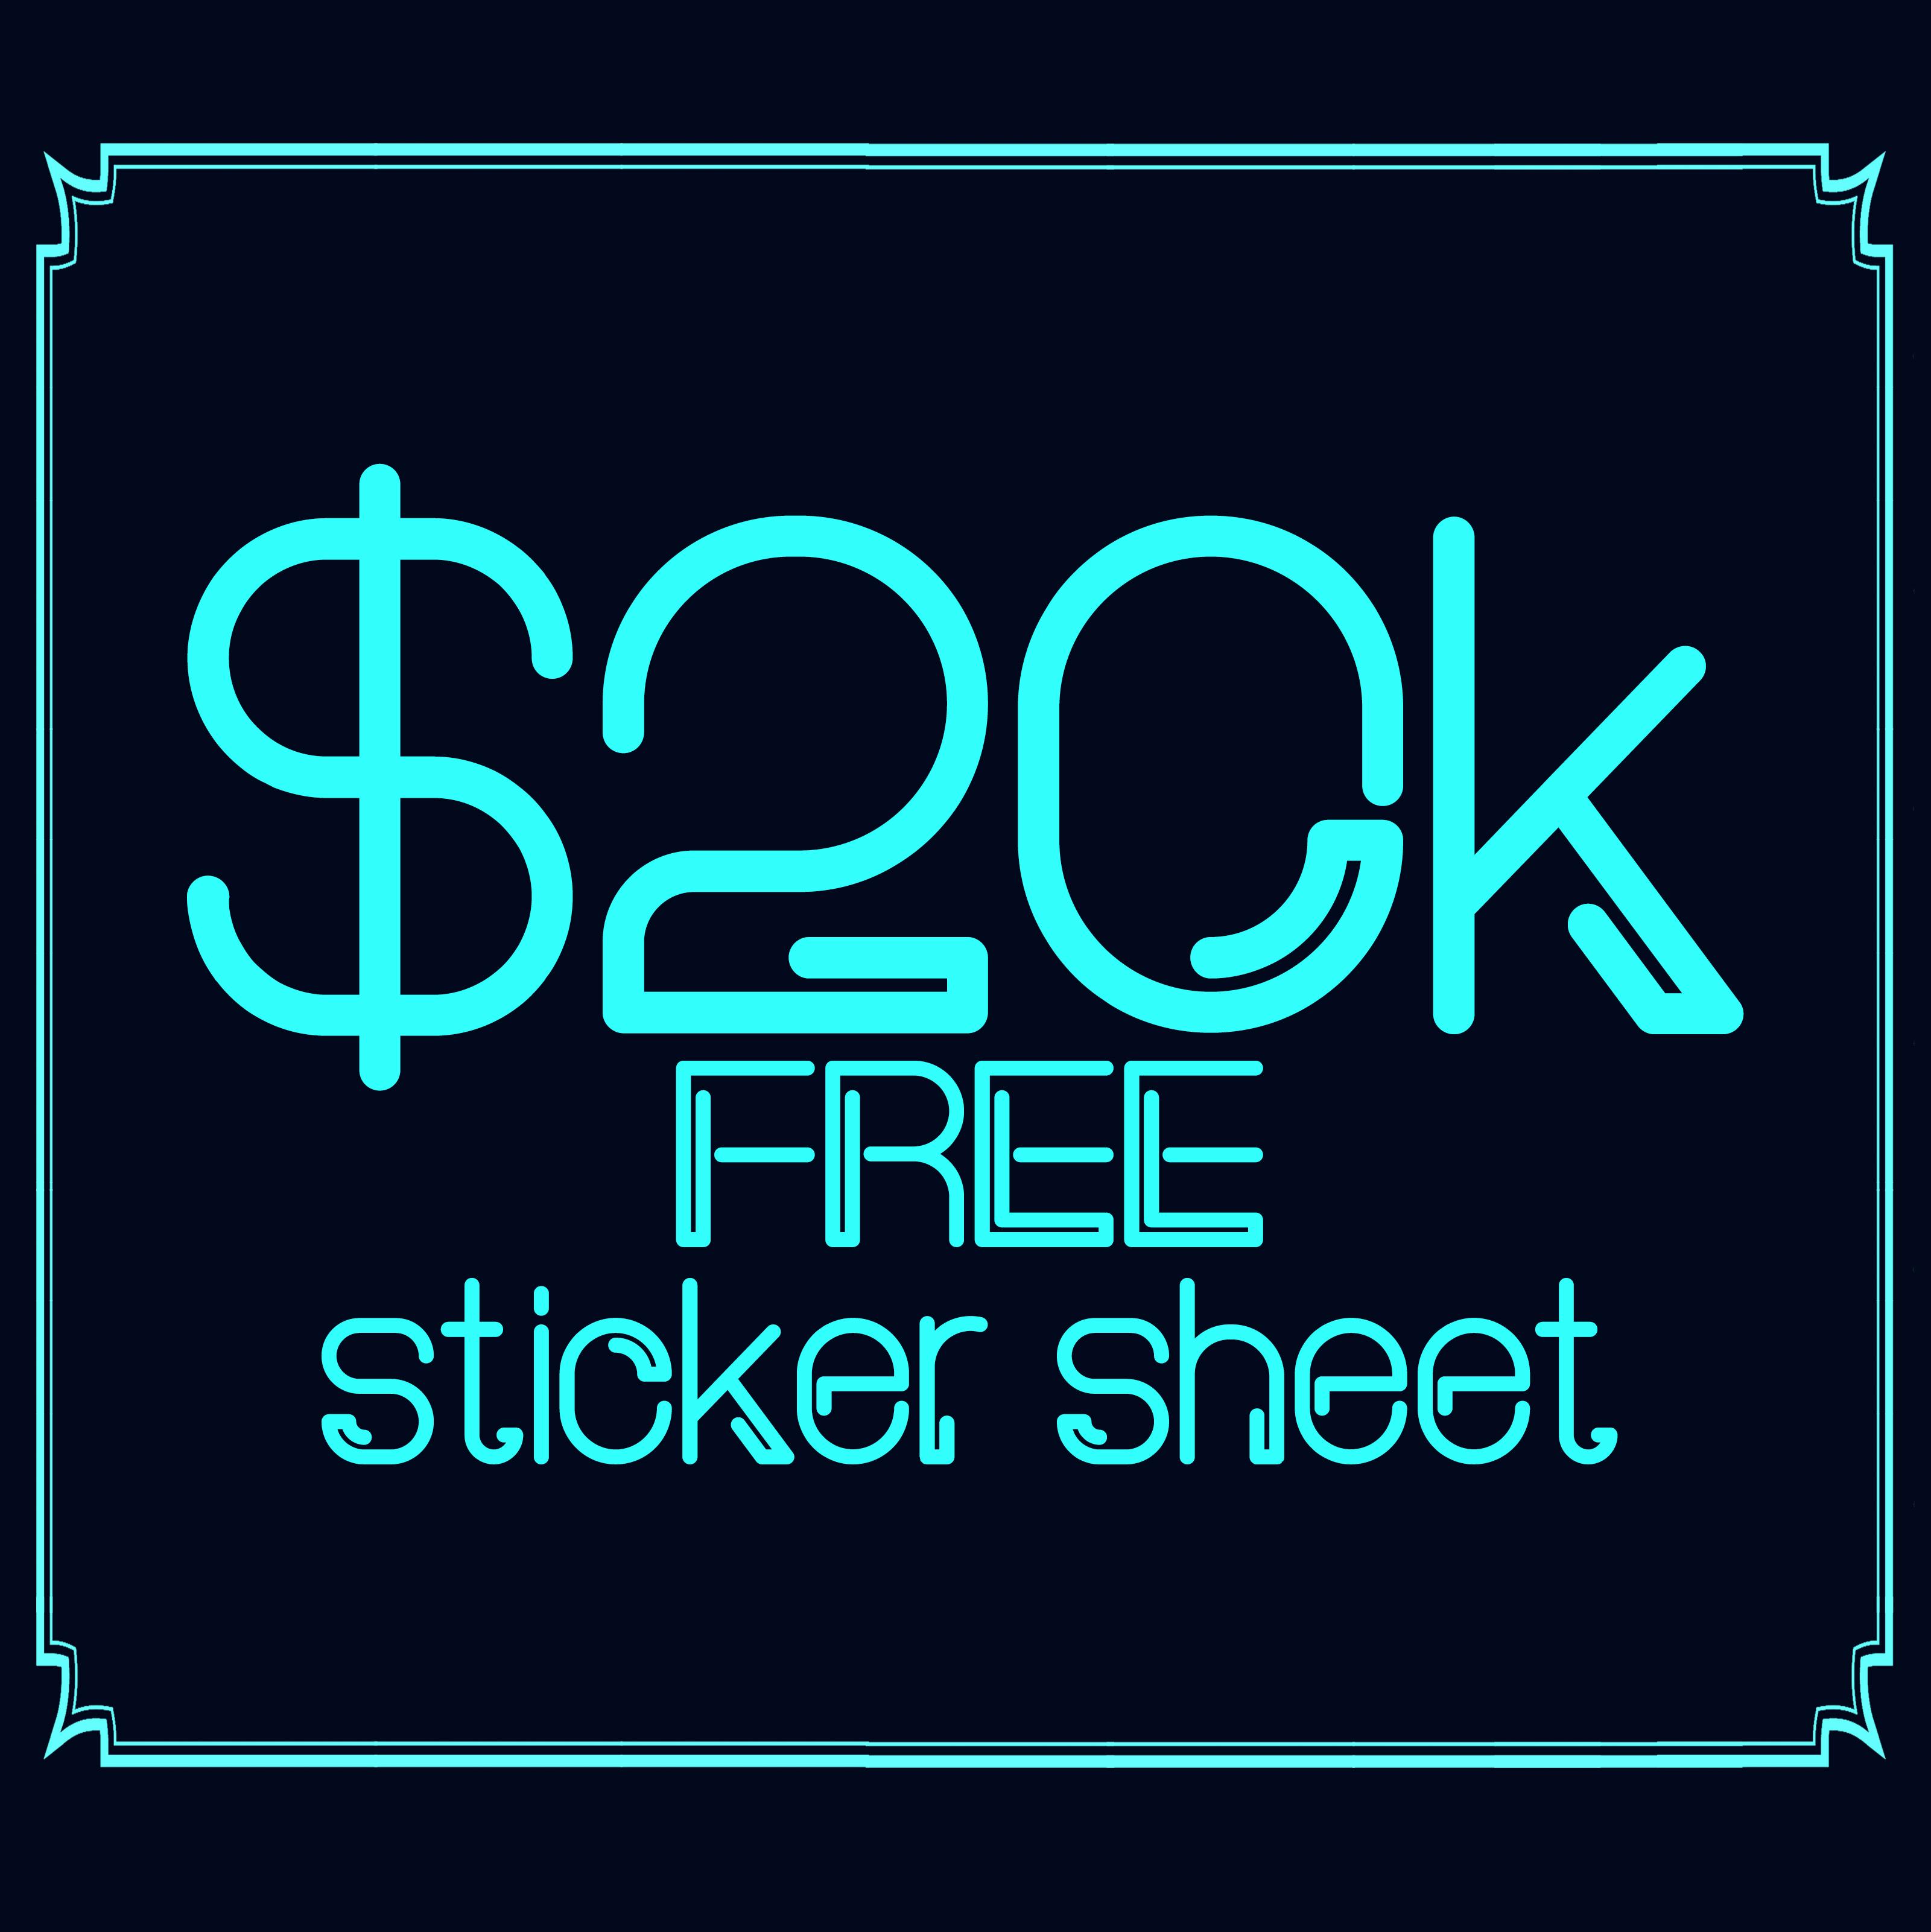 FREE sticker sheet